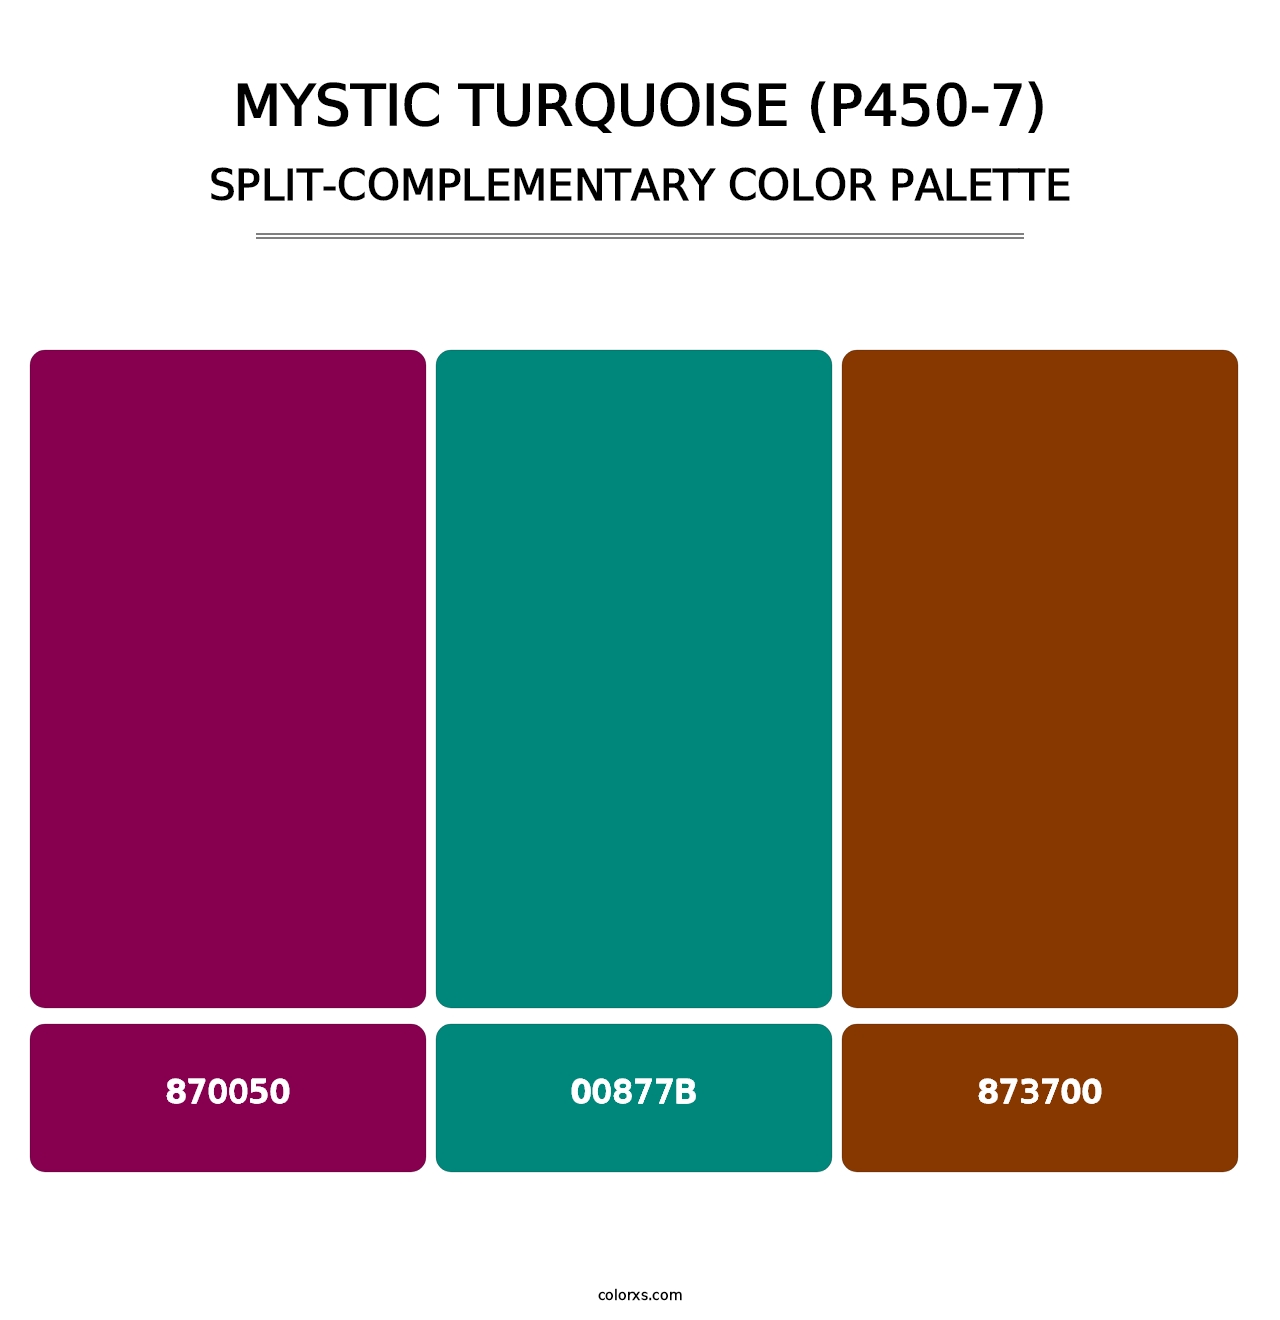 Mystic Turquoise (P450-7) - Split-Complementary Color Palette